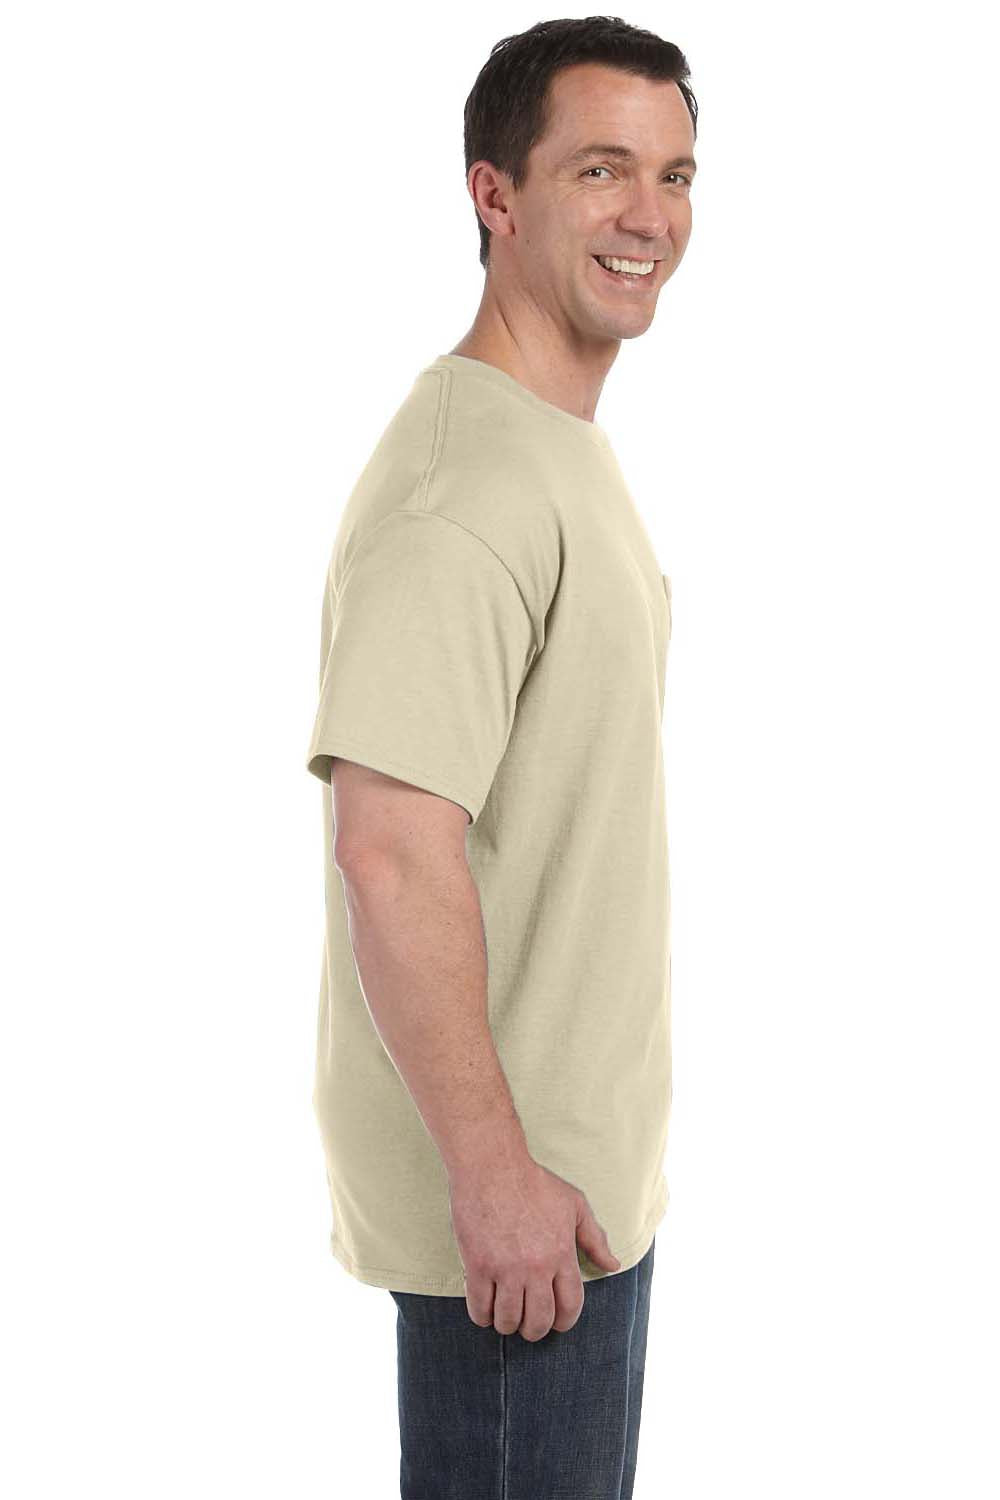 Hanes H5590 Mens ComfortSoft Short Sleeve Crewneck T-Shirt w/ Pocket Sand Brown Side